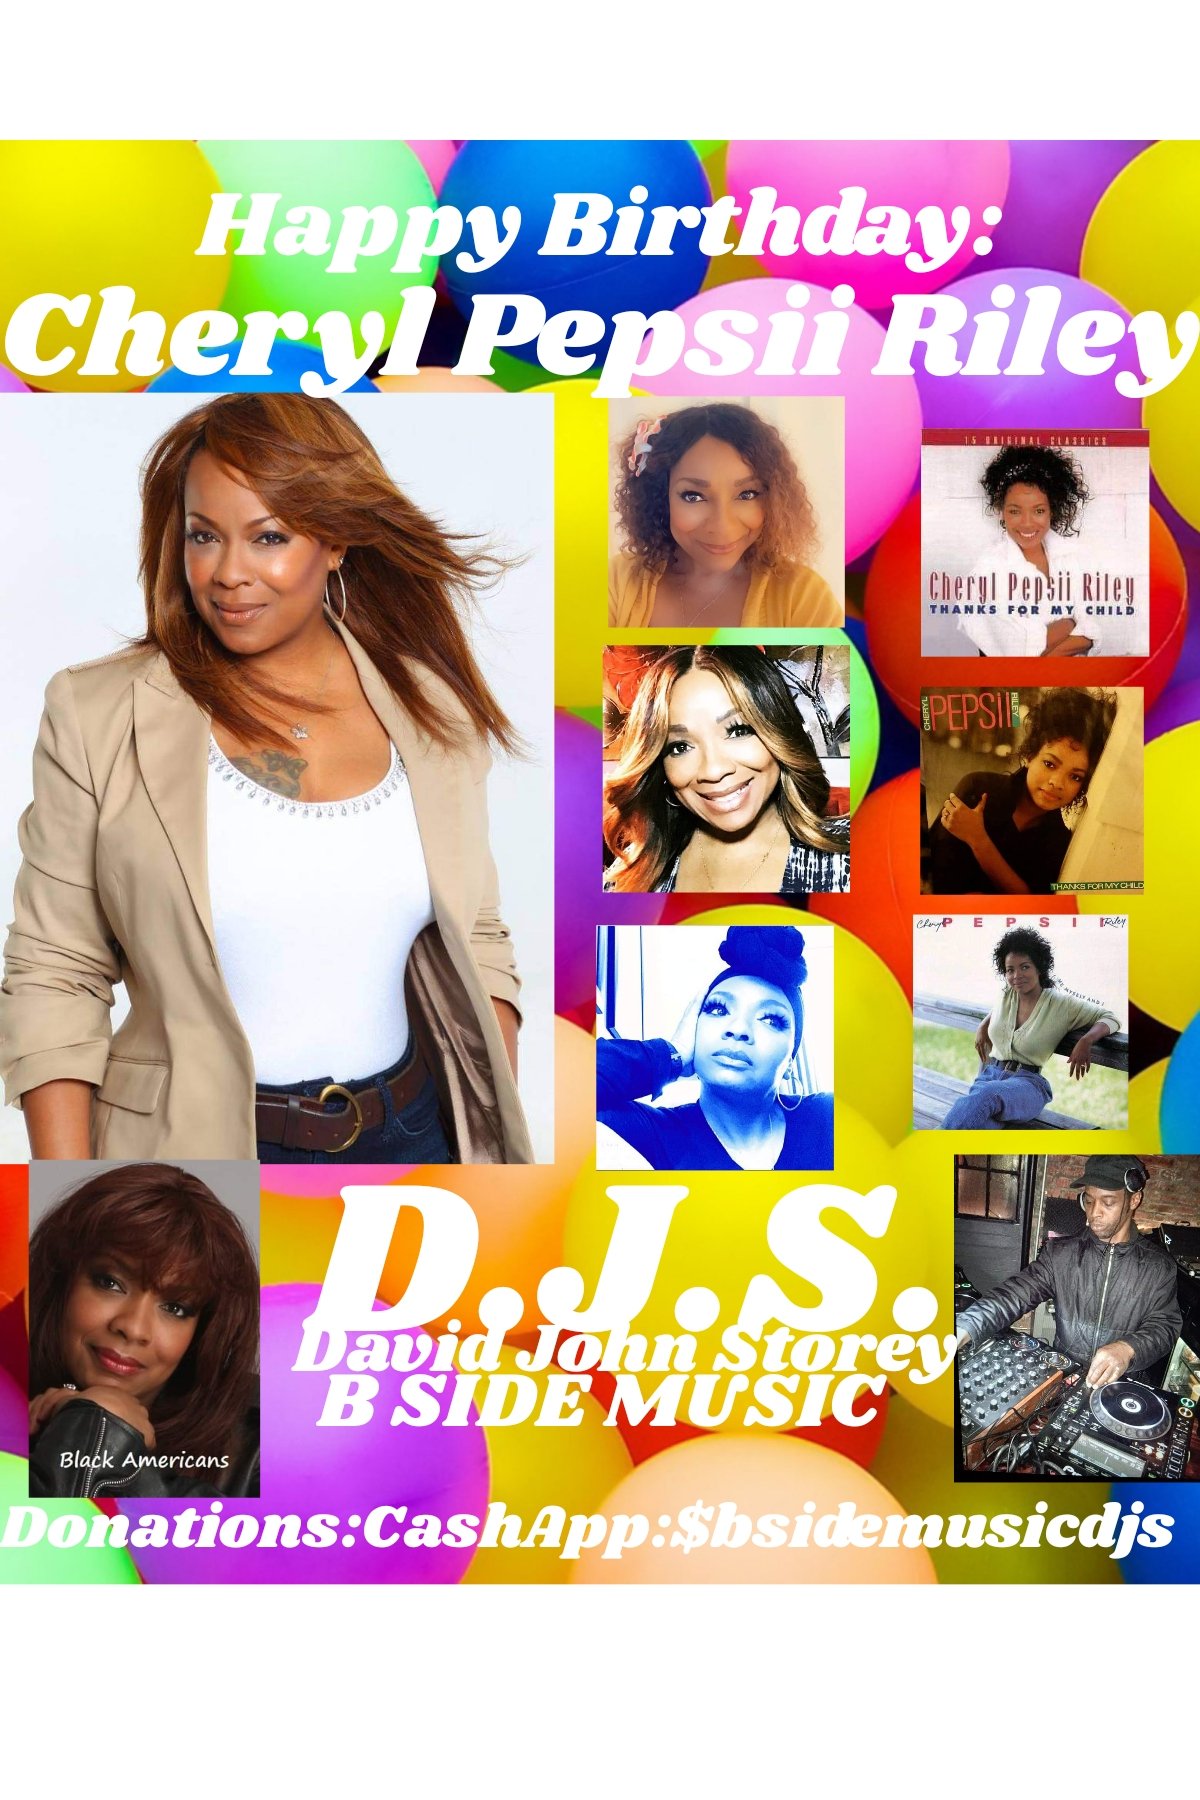 I(D.J.S.) wish Singer/Actress: \"CHERYL PEPSII RILEY\" Happy Birthday!!!! 